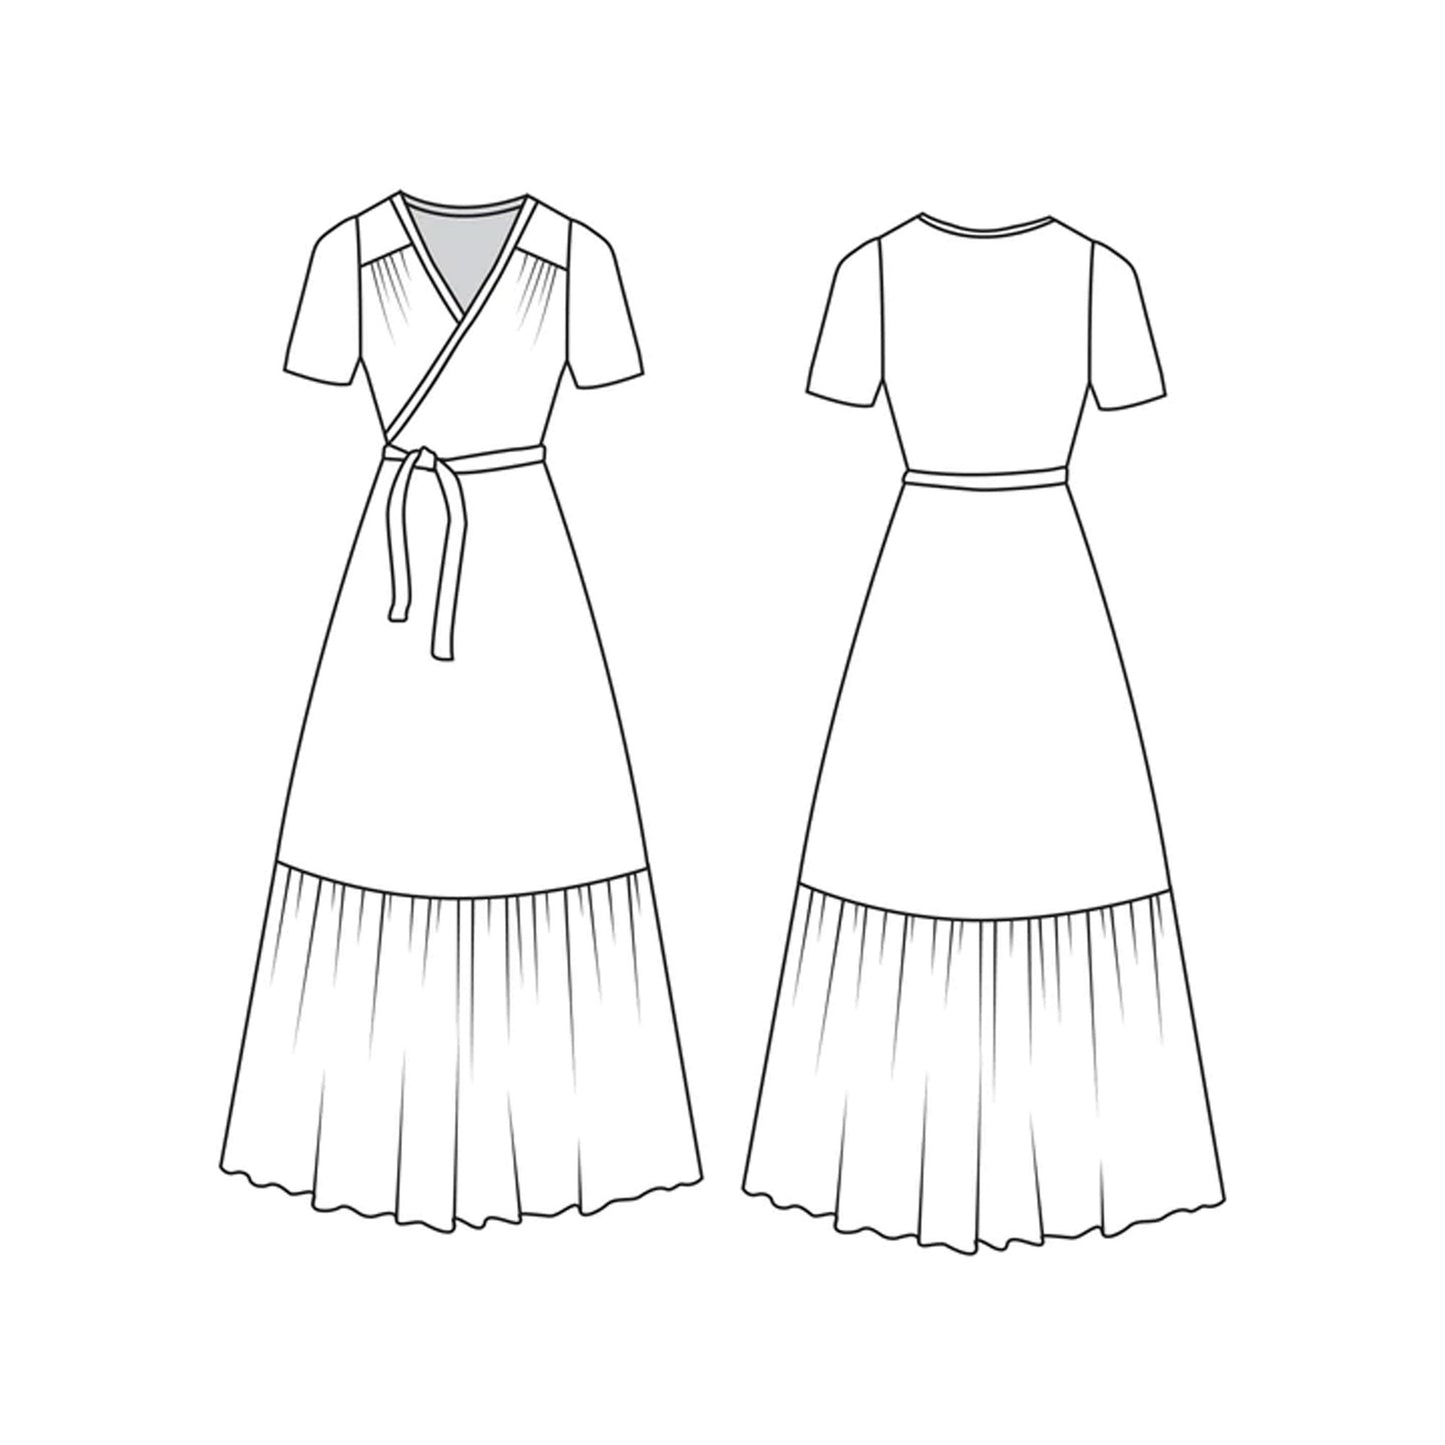 The Westcliff Dress Sewing Pattern - Friday Pattern Company